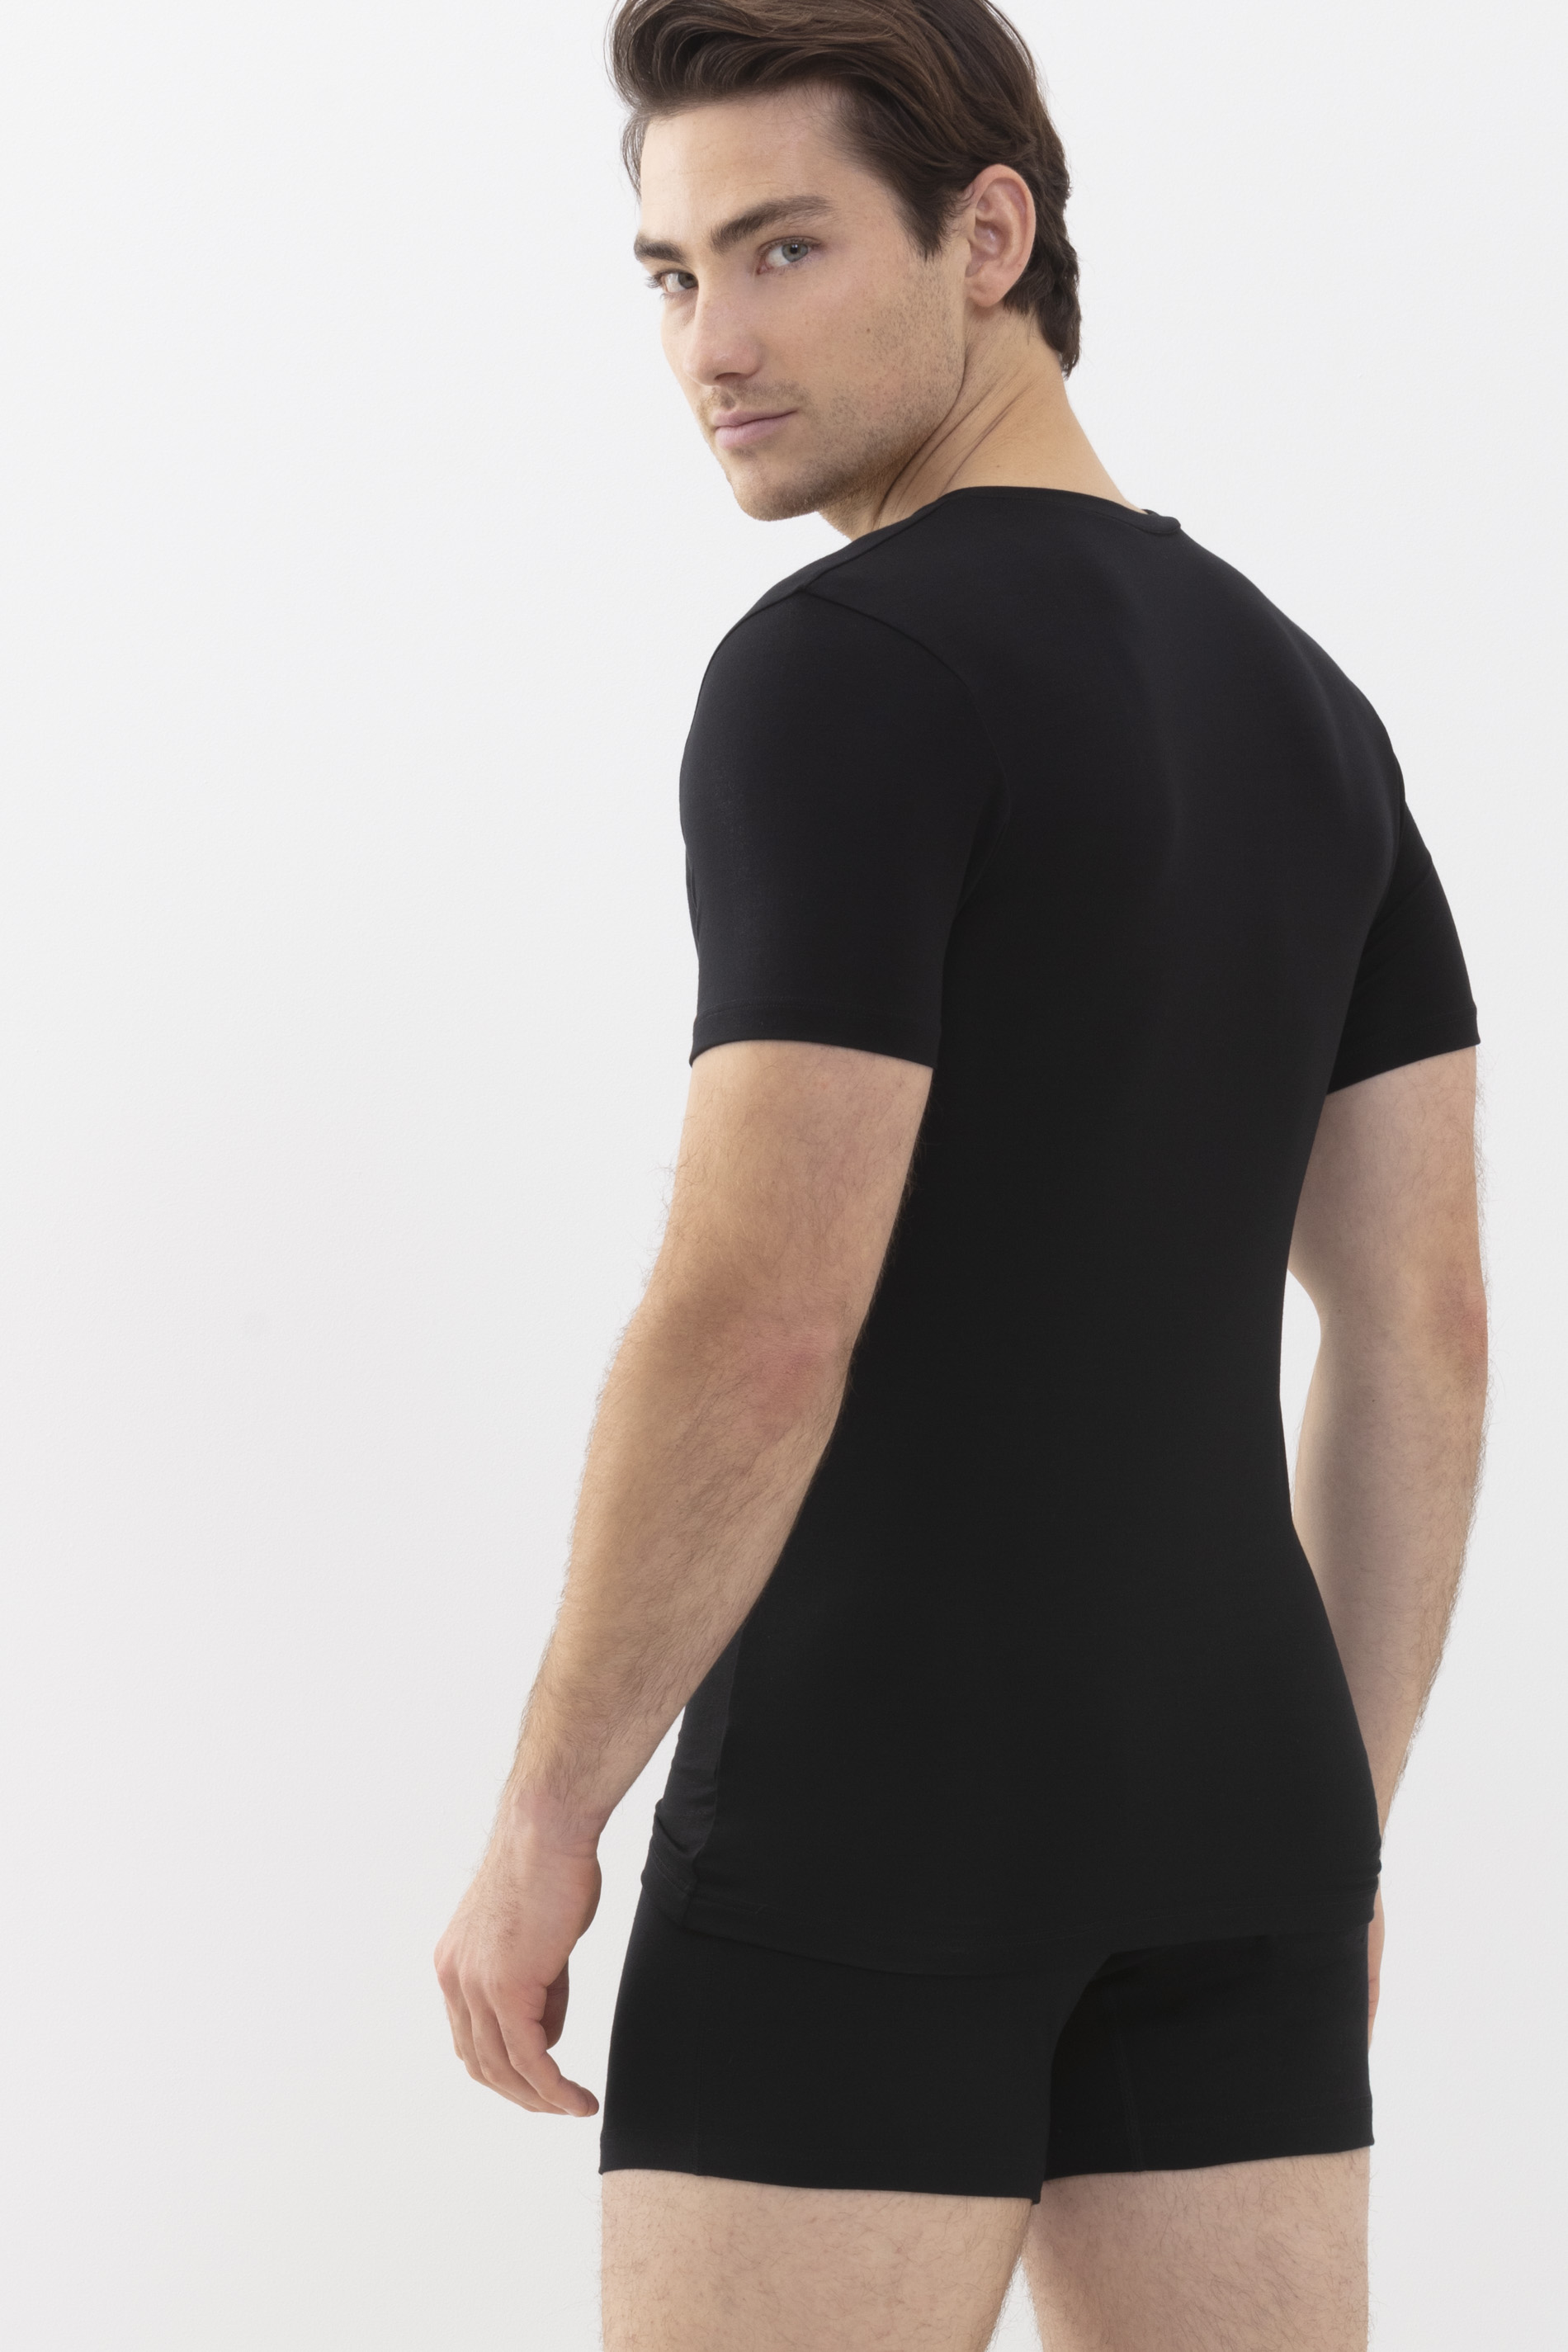 T-shirt Black Serie Superior Modal Rear View | mey®